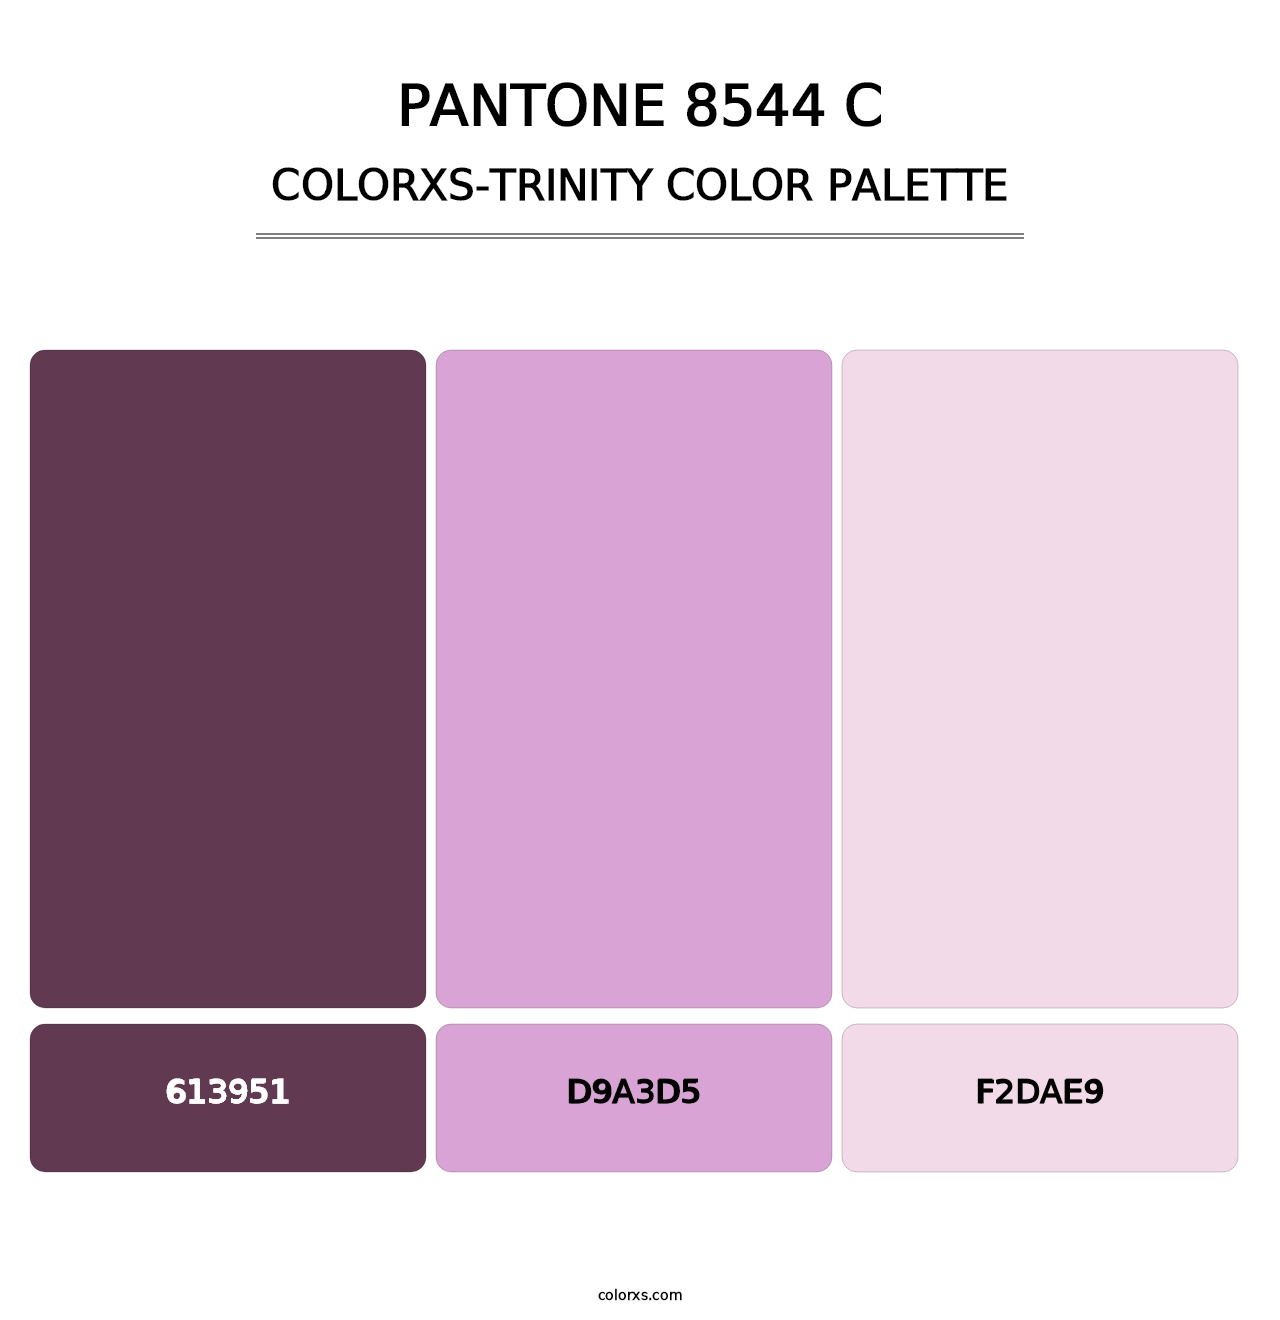 PANTONE 8544 C - Colorxs Trinity Palette